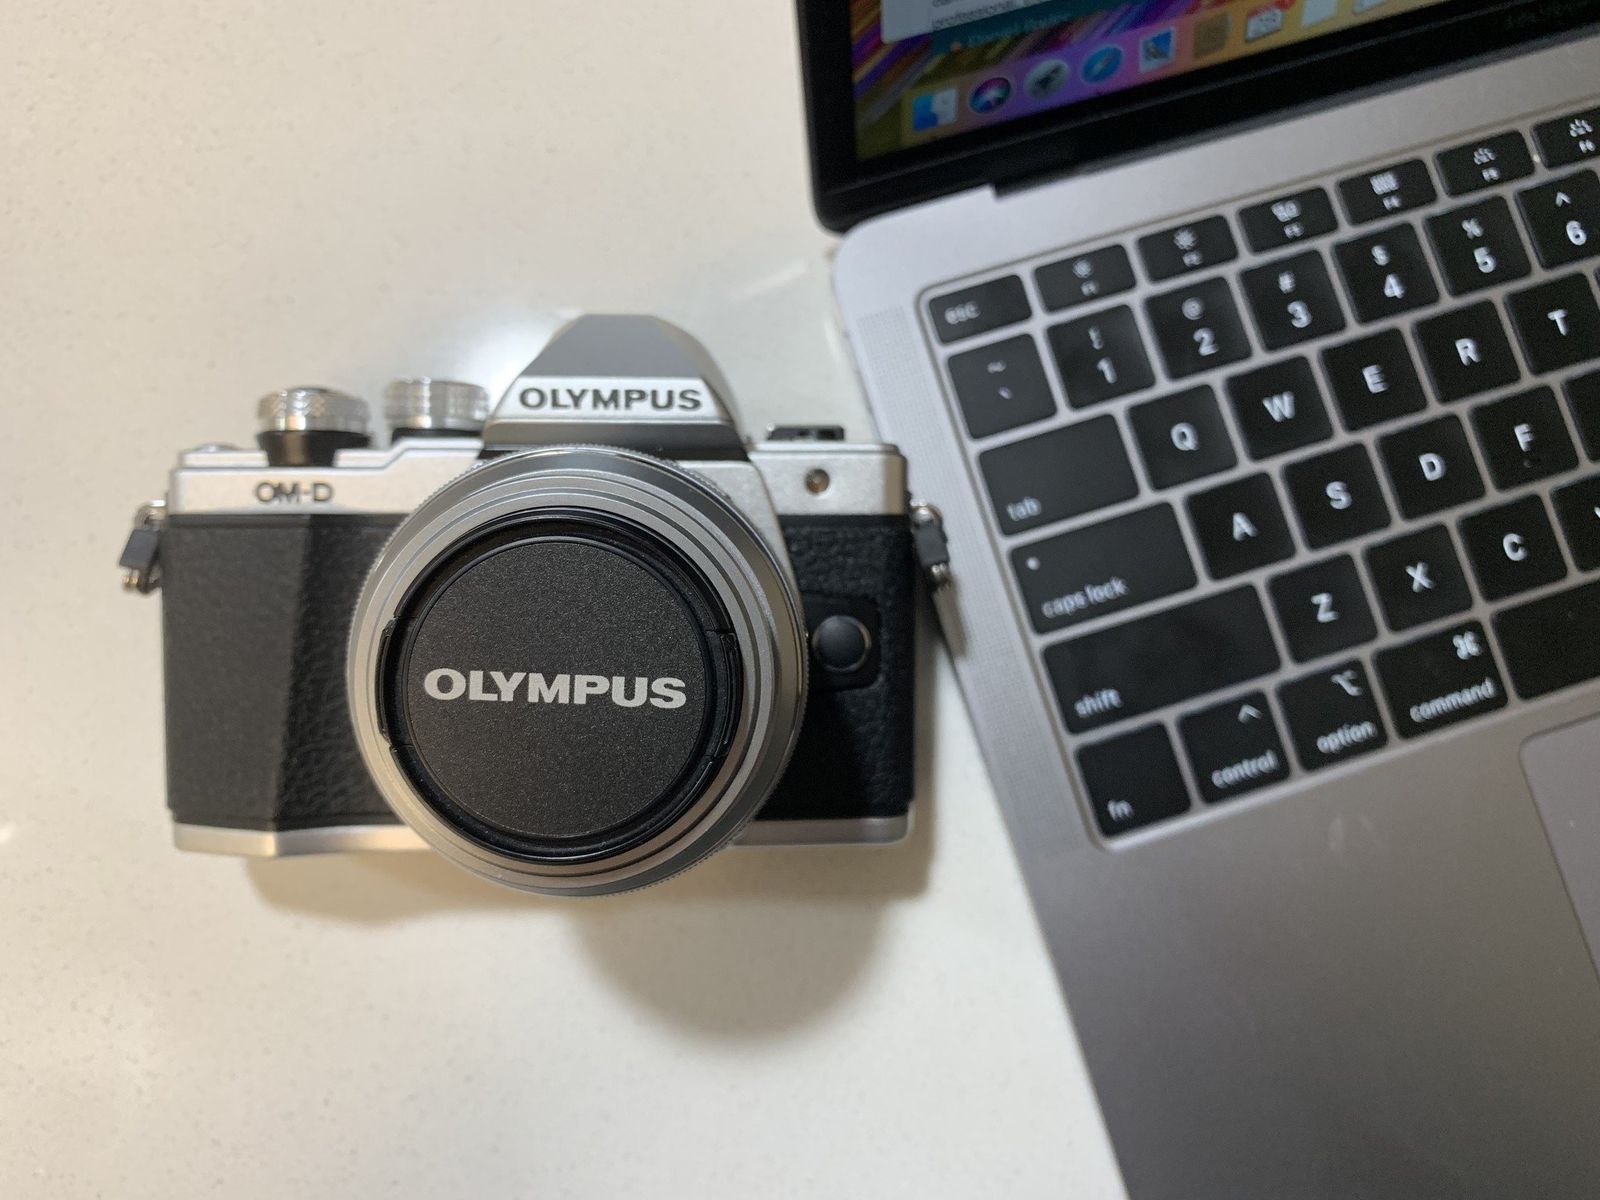 Olympus mirrorless camera with Mac